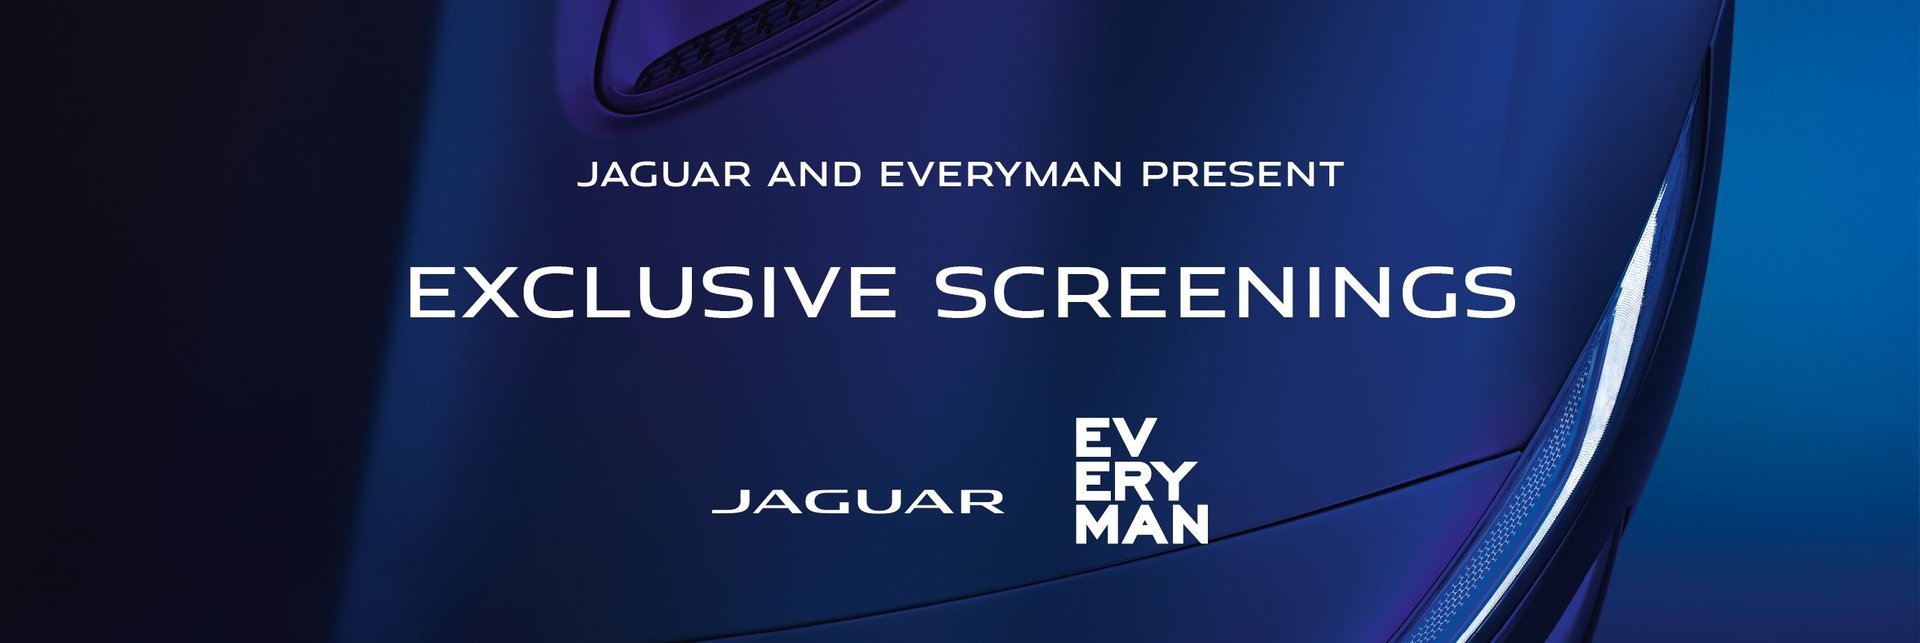 Jaguar and Everyman present Exclusive screenings